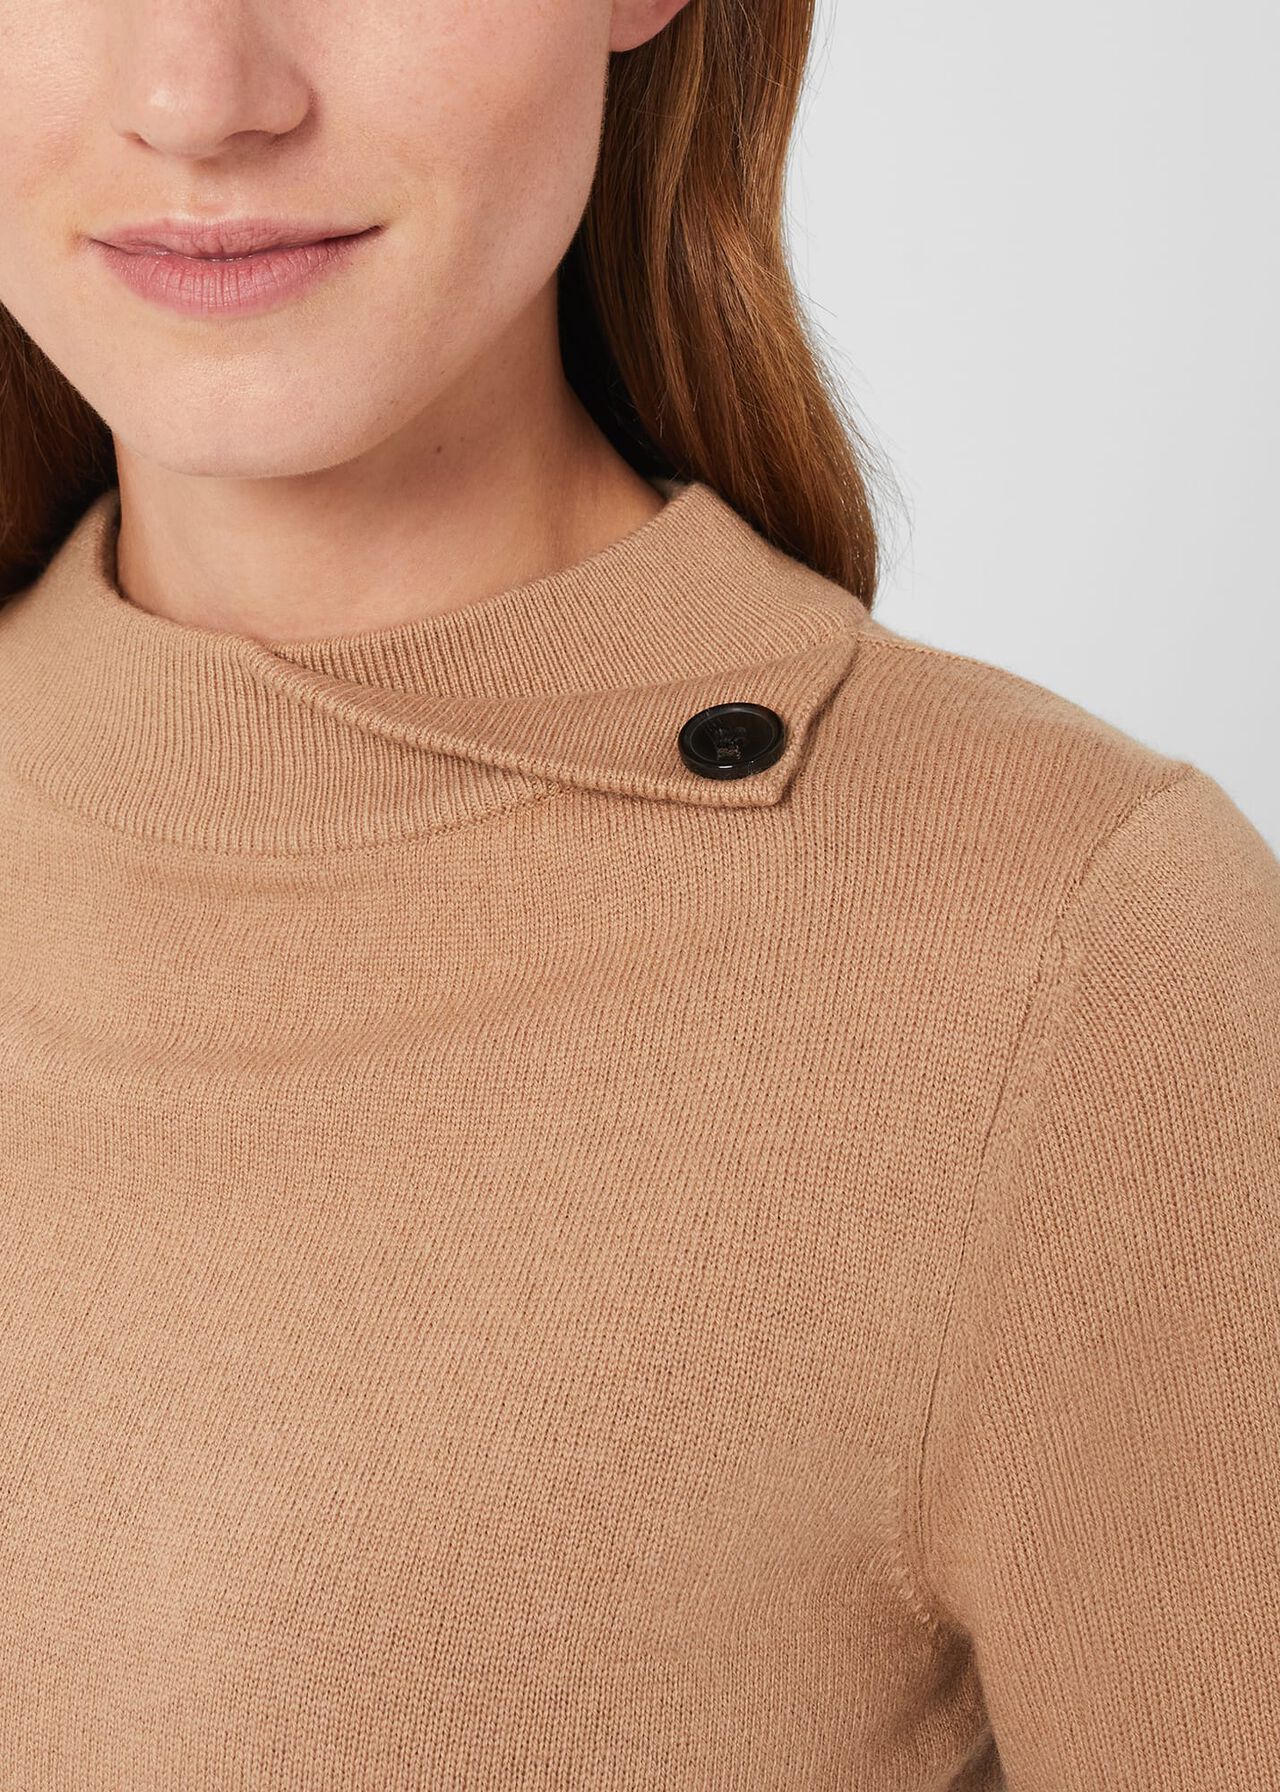 Talia Wool Cashmere Sweater, Camel, hi-res